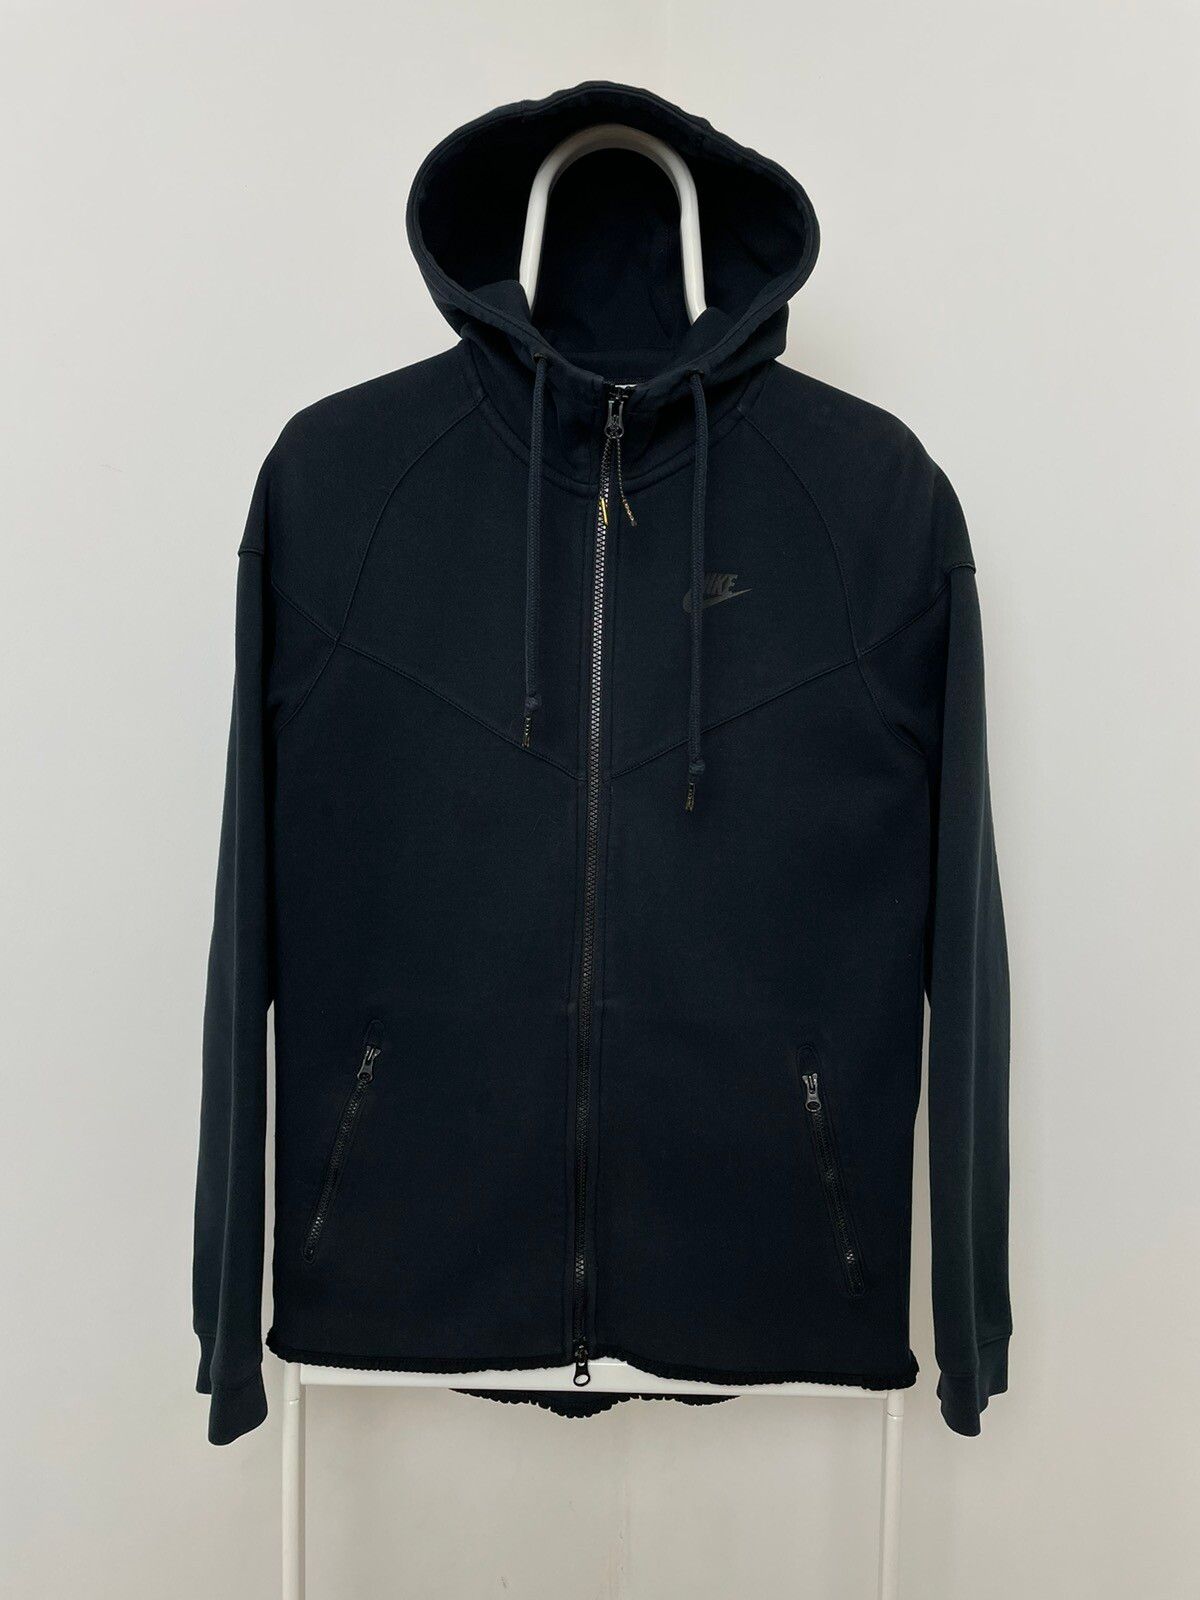 Nike Nike Tech Fleece ninja zip hoodie black | Grailed